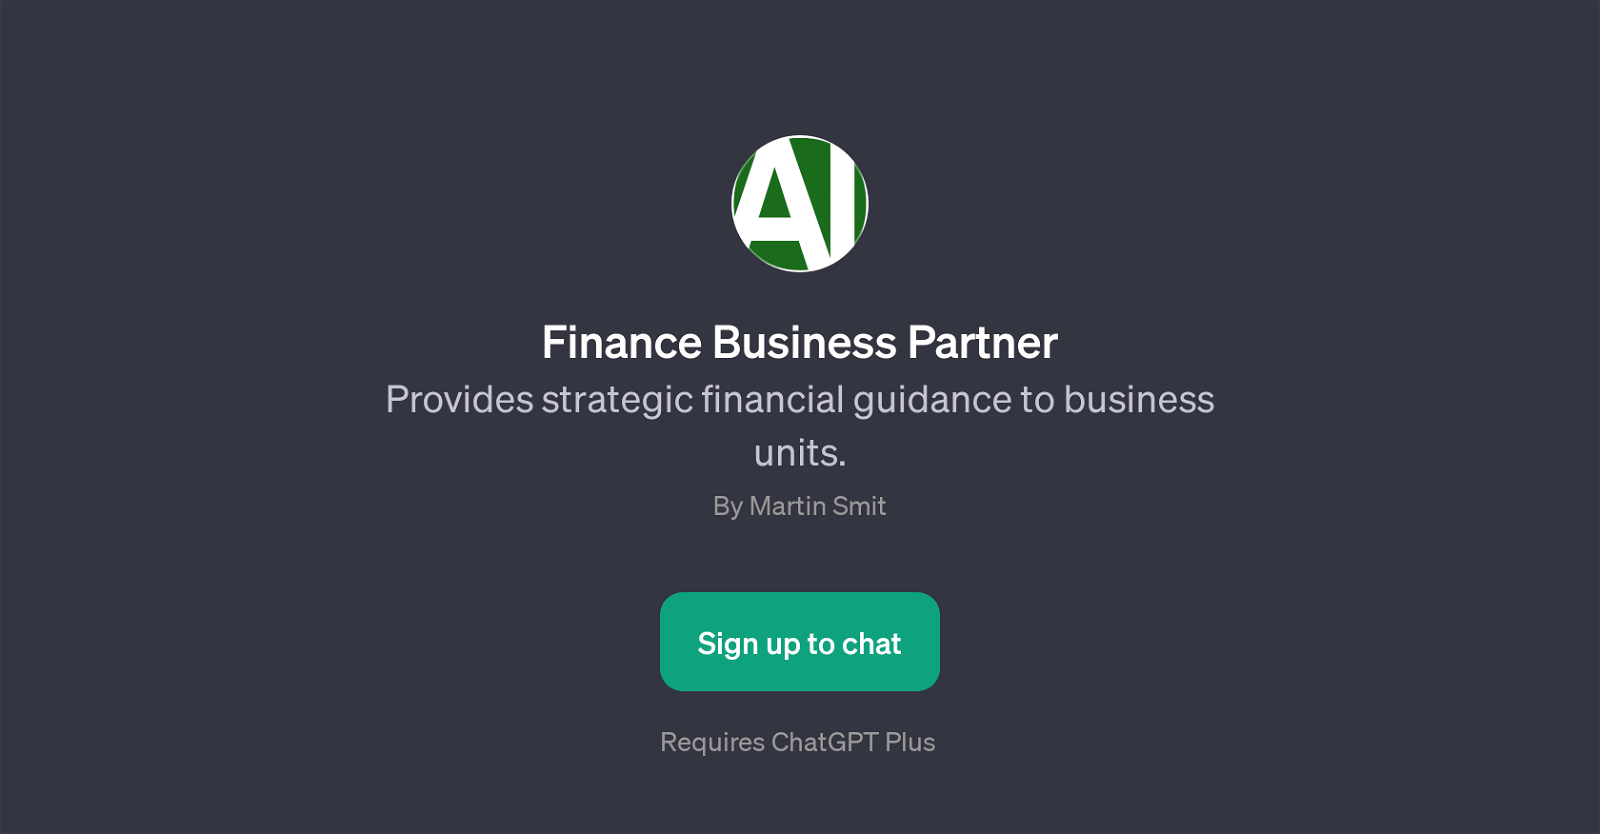 Finance Business Partner website